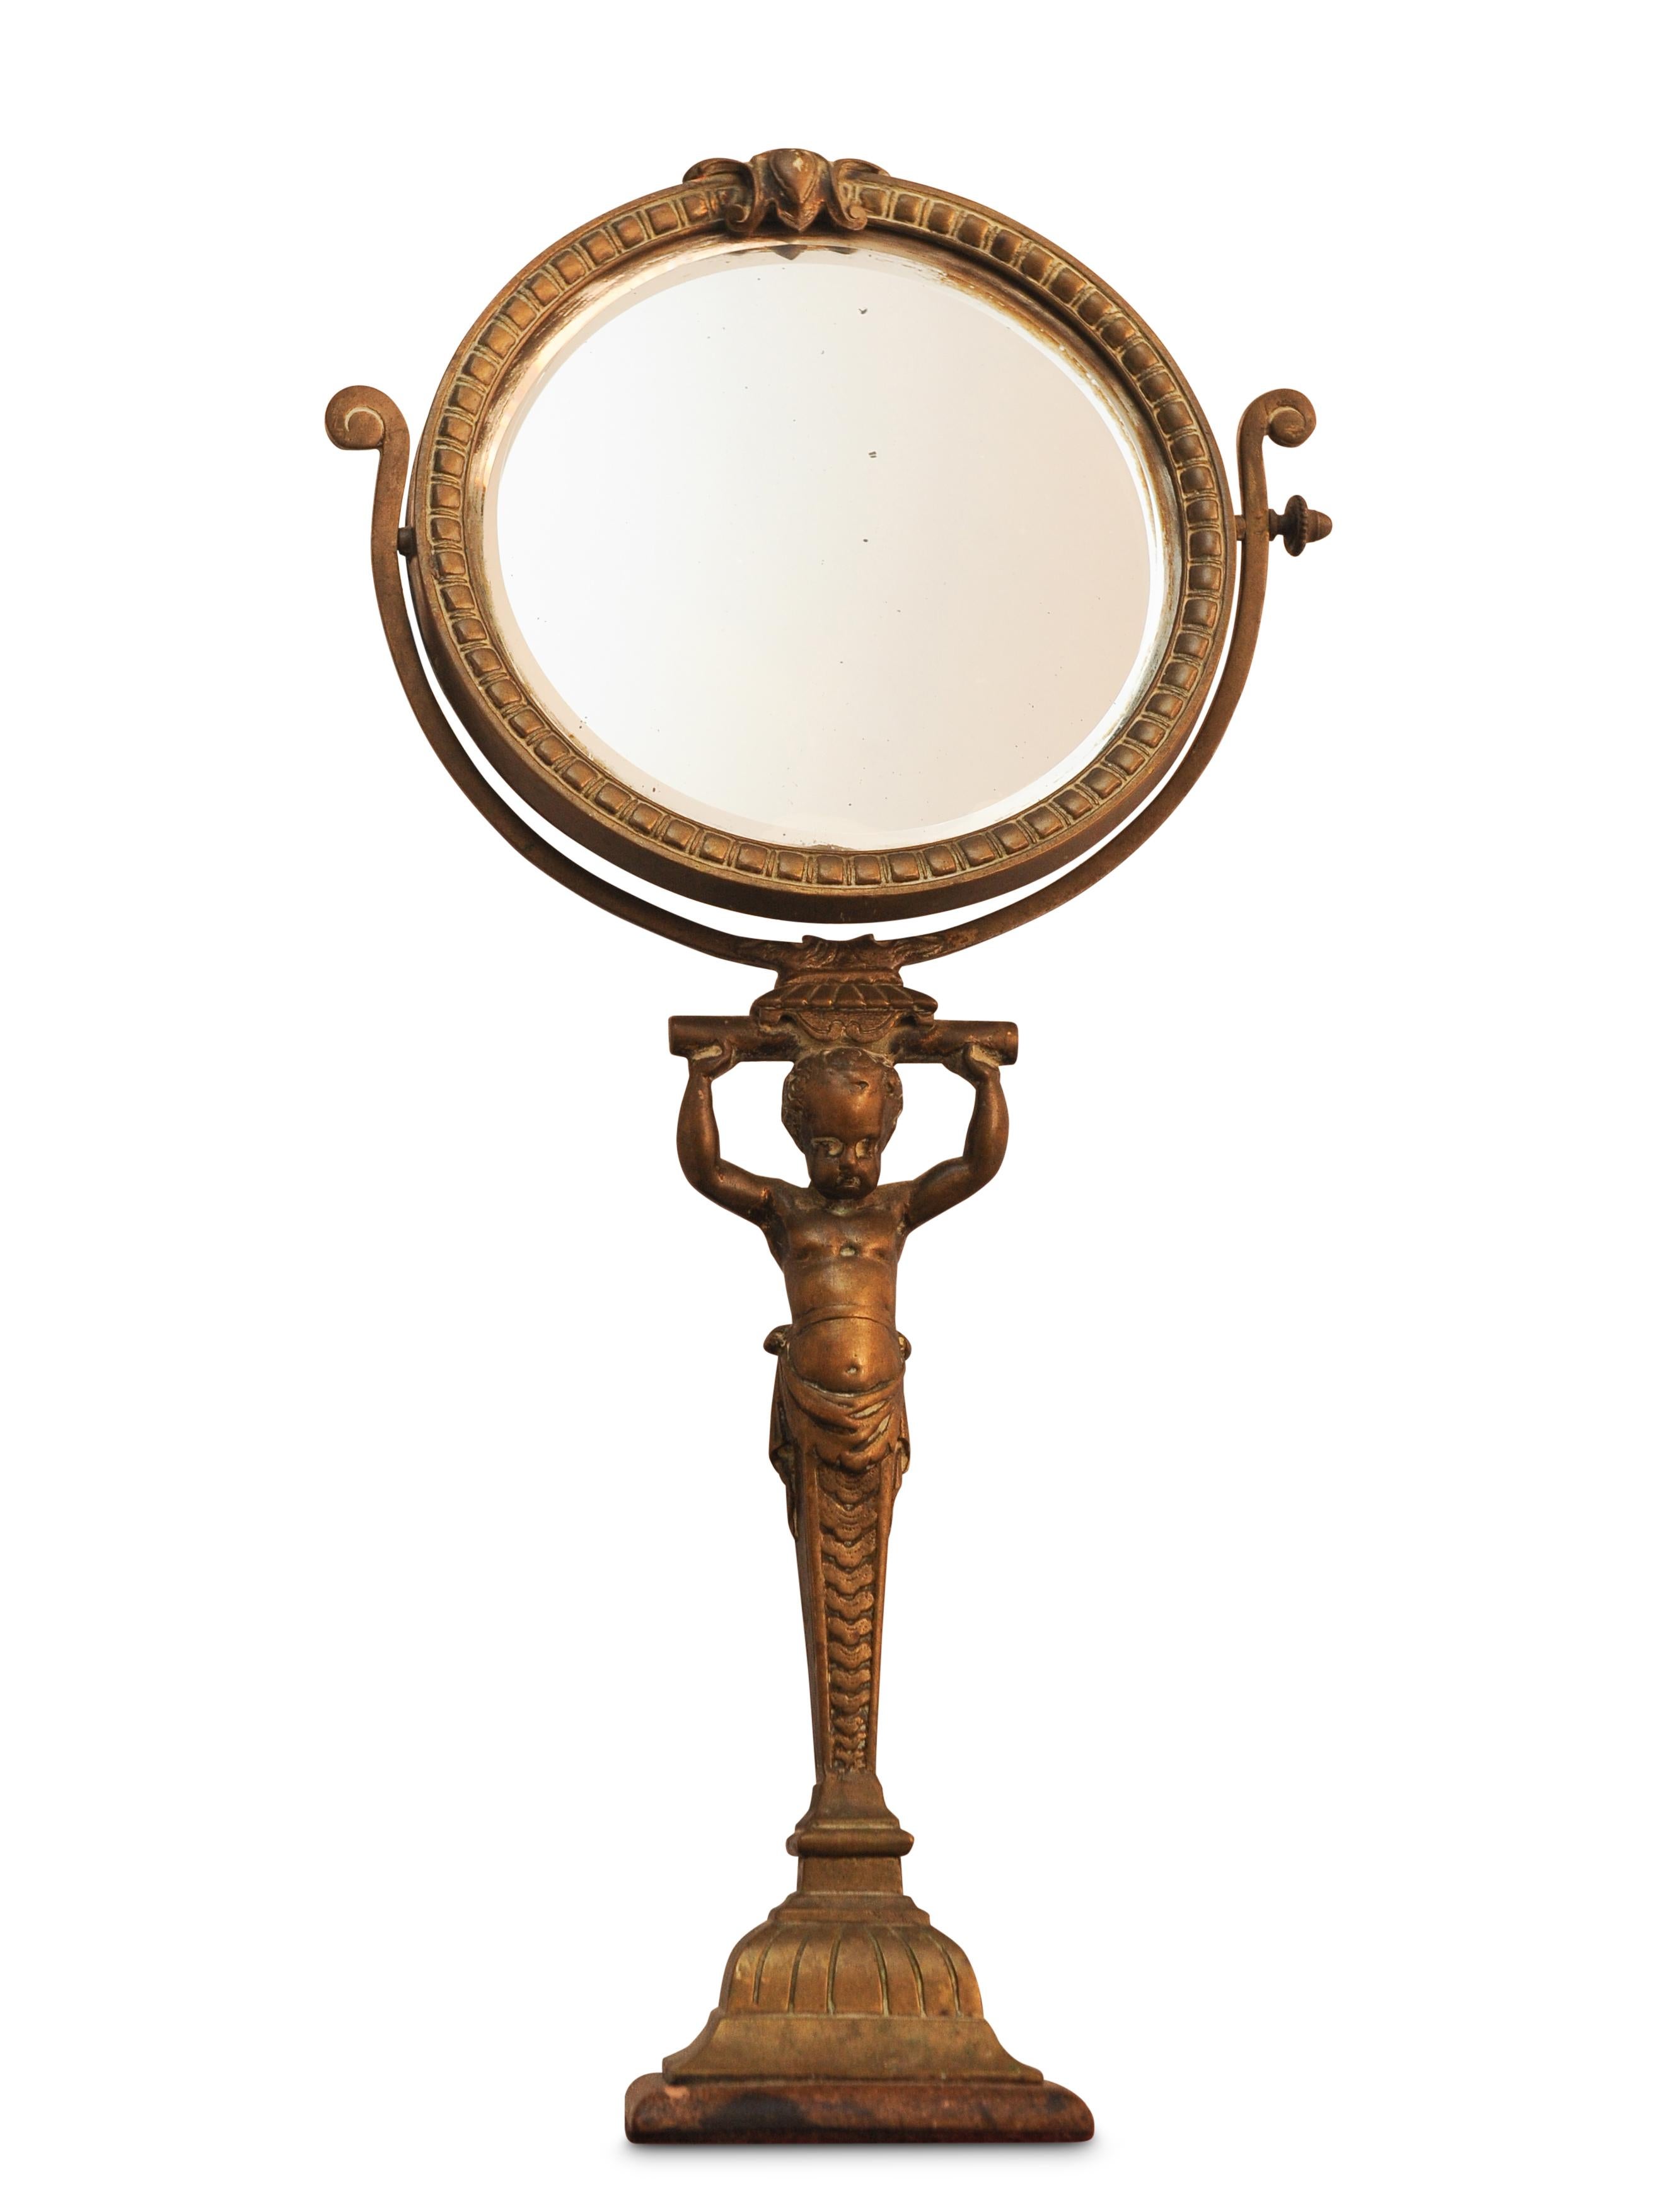 A Rare Regency Brass Revolving Bevelled Edge Vanity Mirror With Darted Frame & Decorative Cherub Column.
